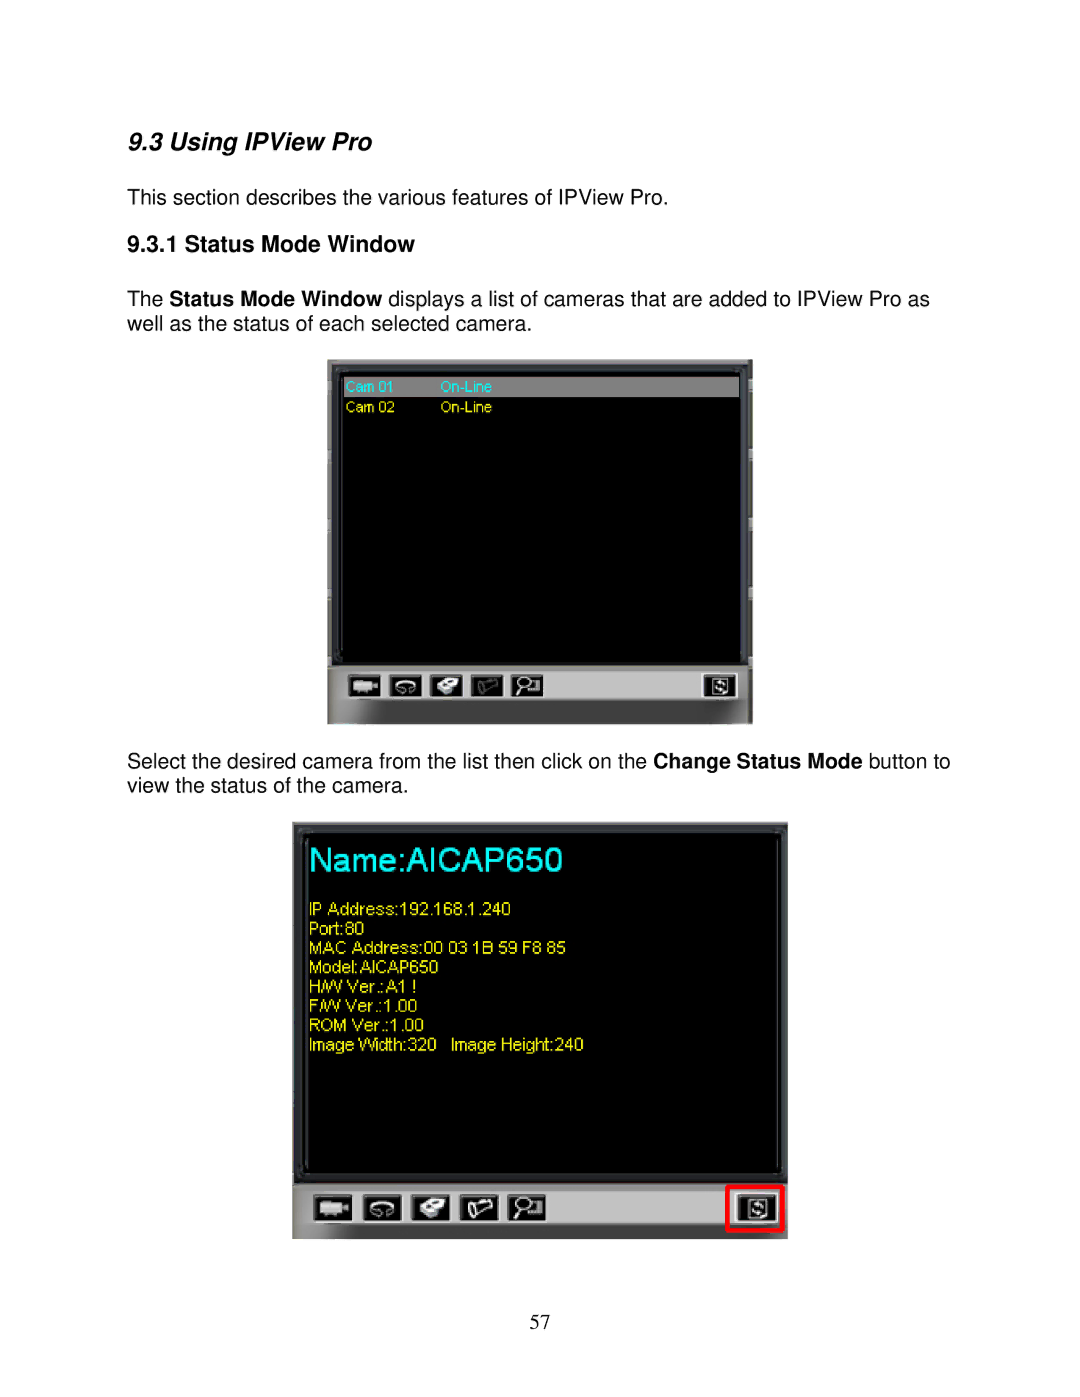 Airlink101 AICAP650 user manual Using IPView Pro, Status Mode Window 